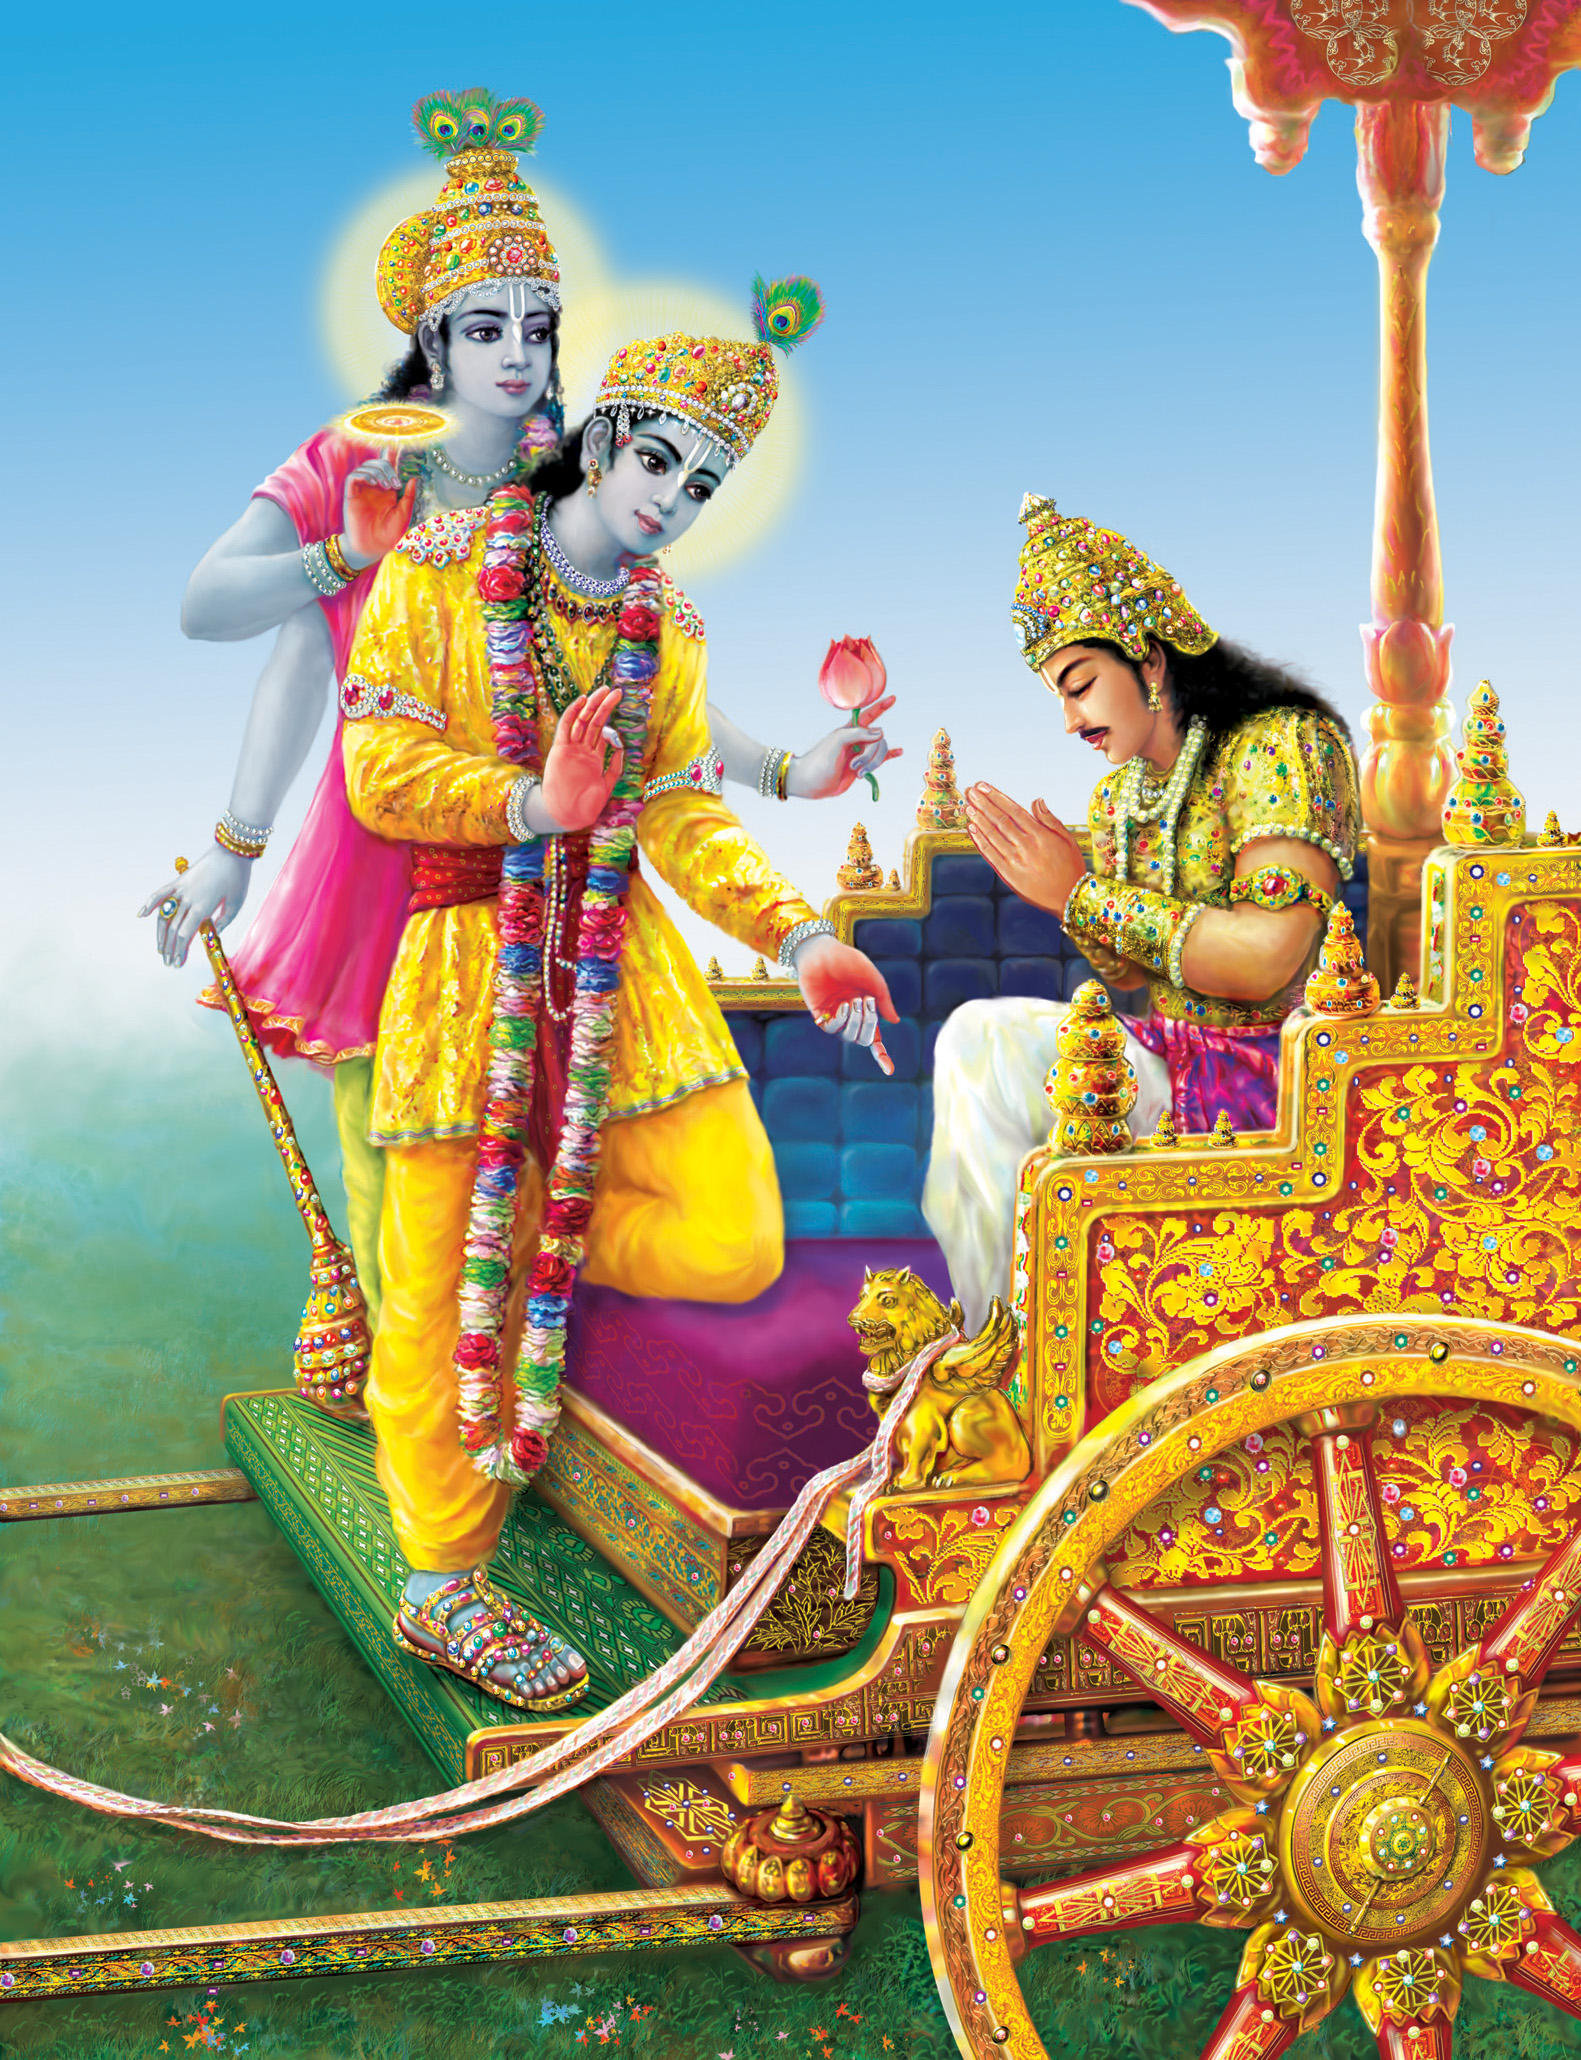 Bhagavad Gita: At last Krishna showed Arjuna His two-armed form.